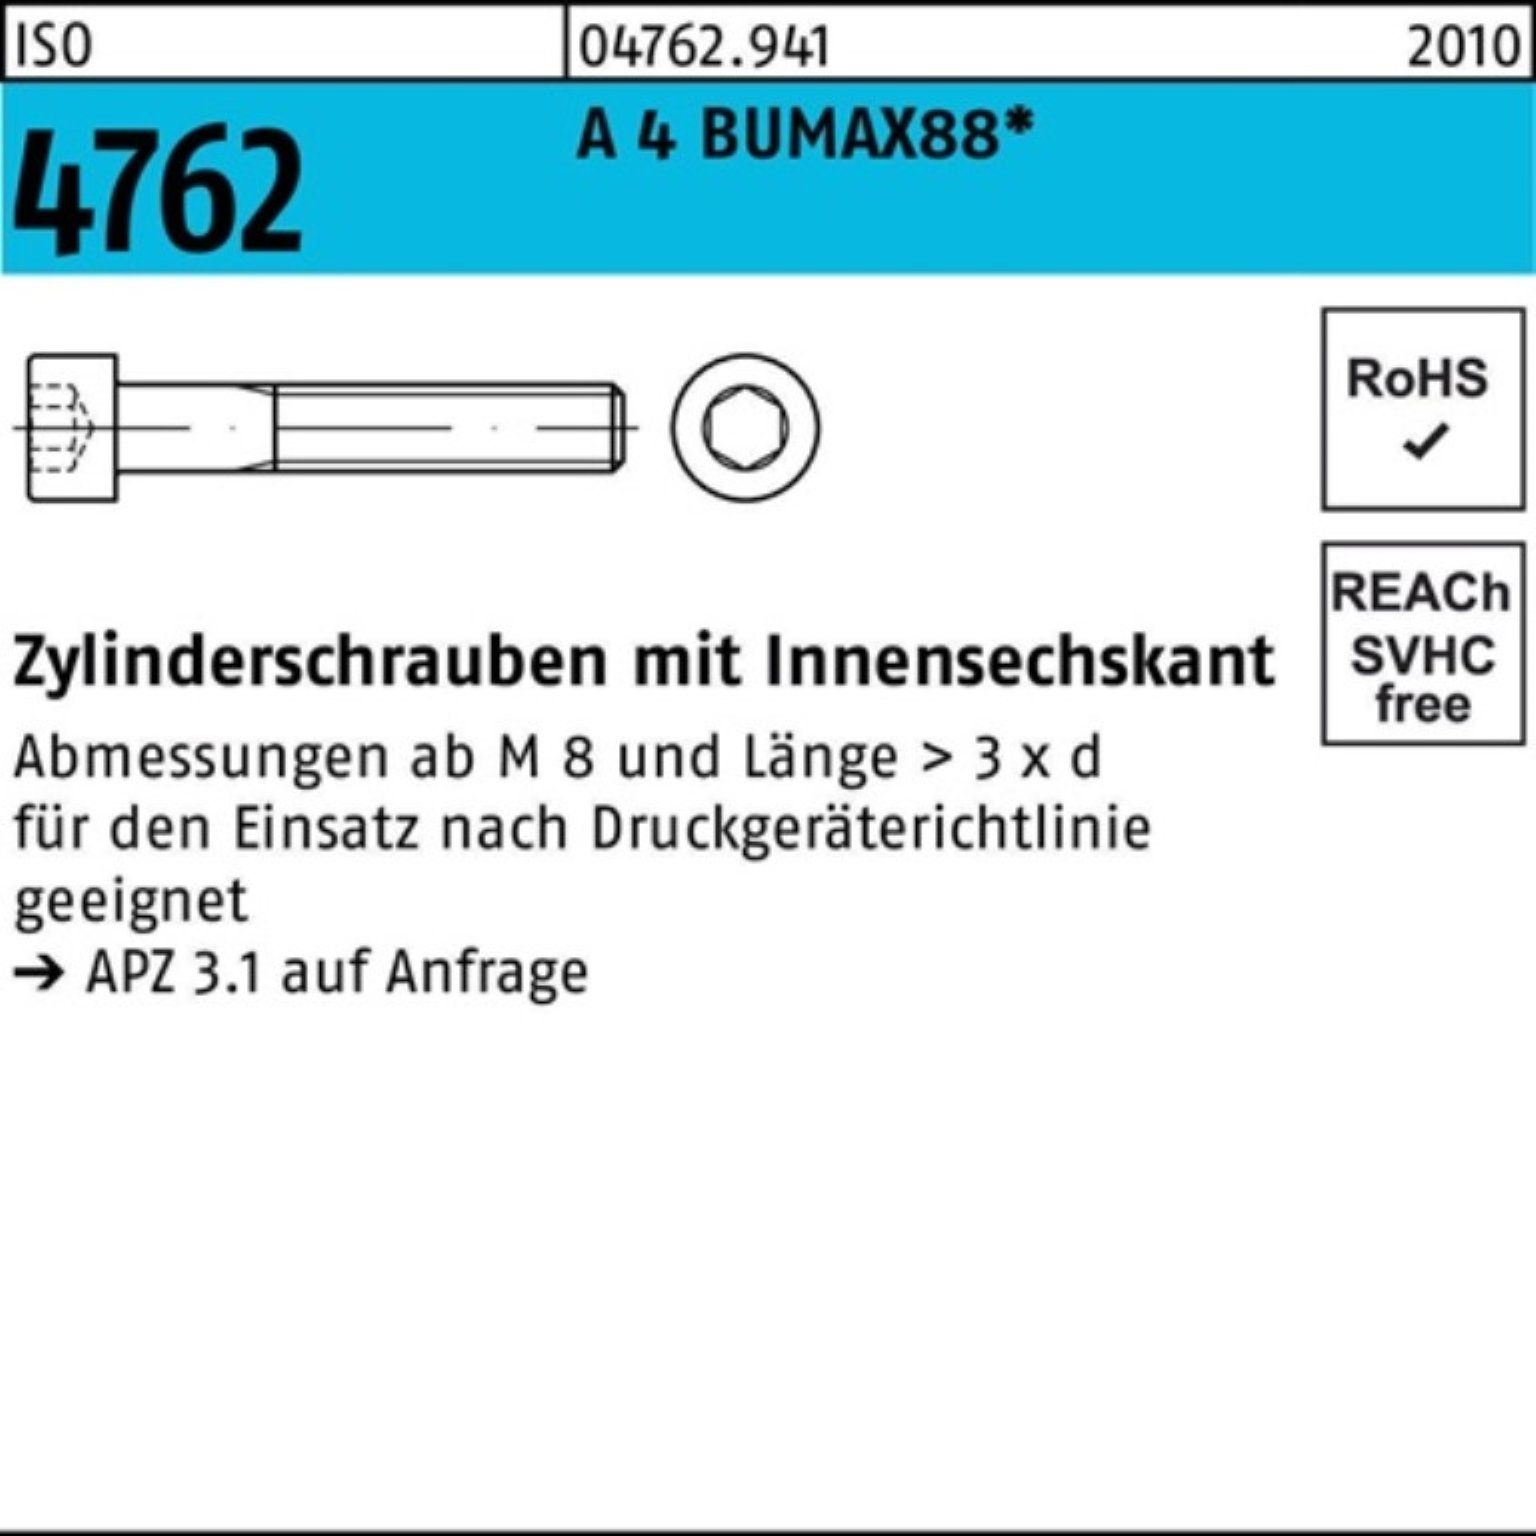 Bufab Zylinderschraube 100er Pack Zylinderschraube ISO 4762 Innen-6kt M16x 40 A 4 BUMAX88 25